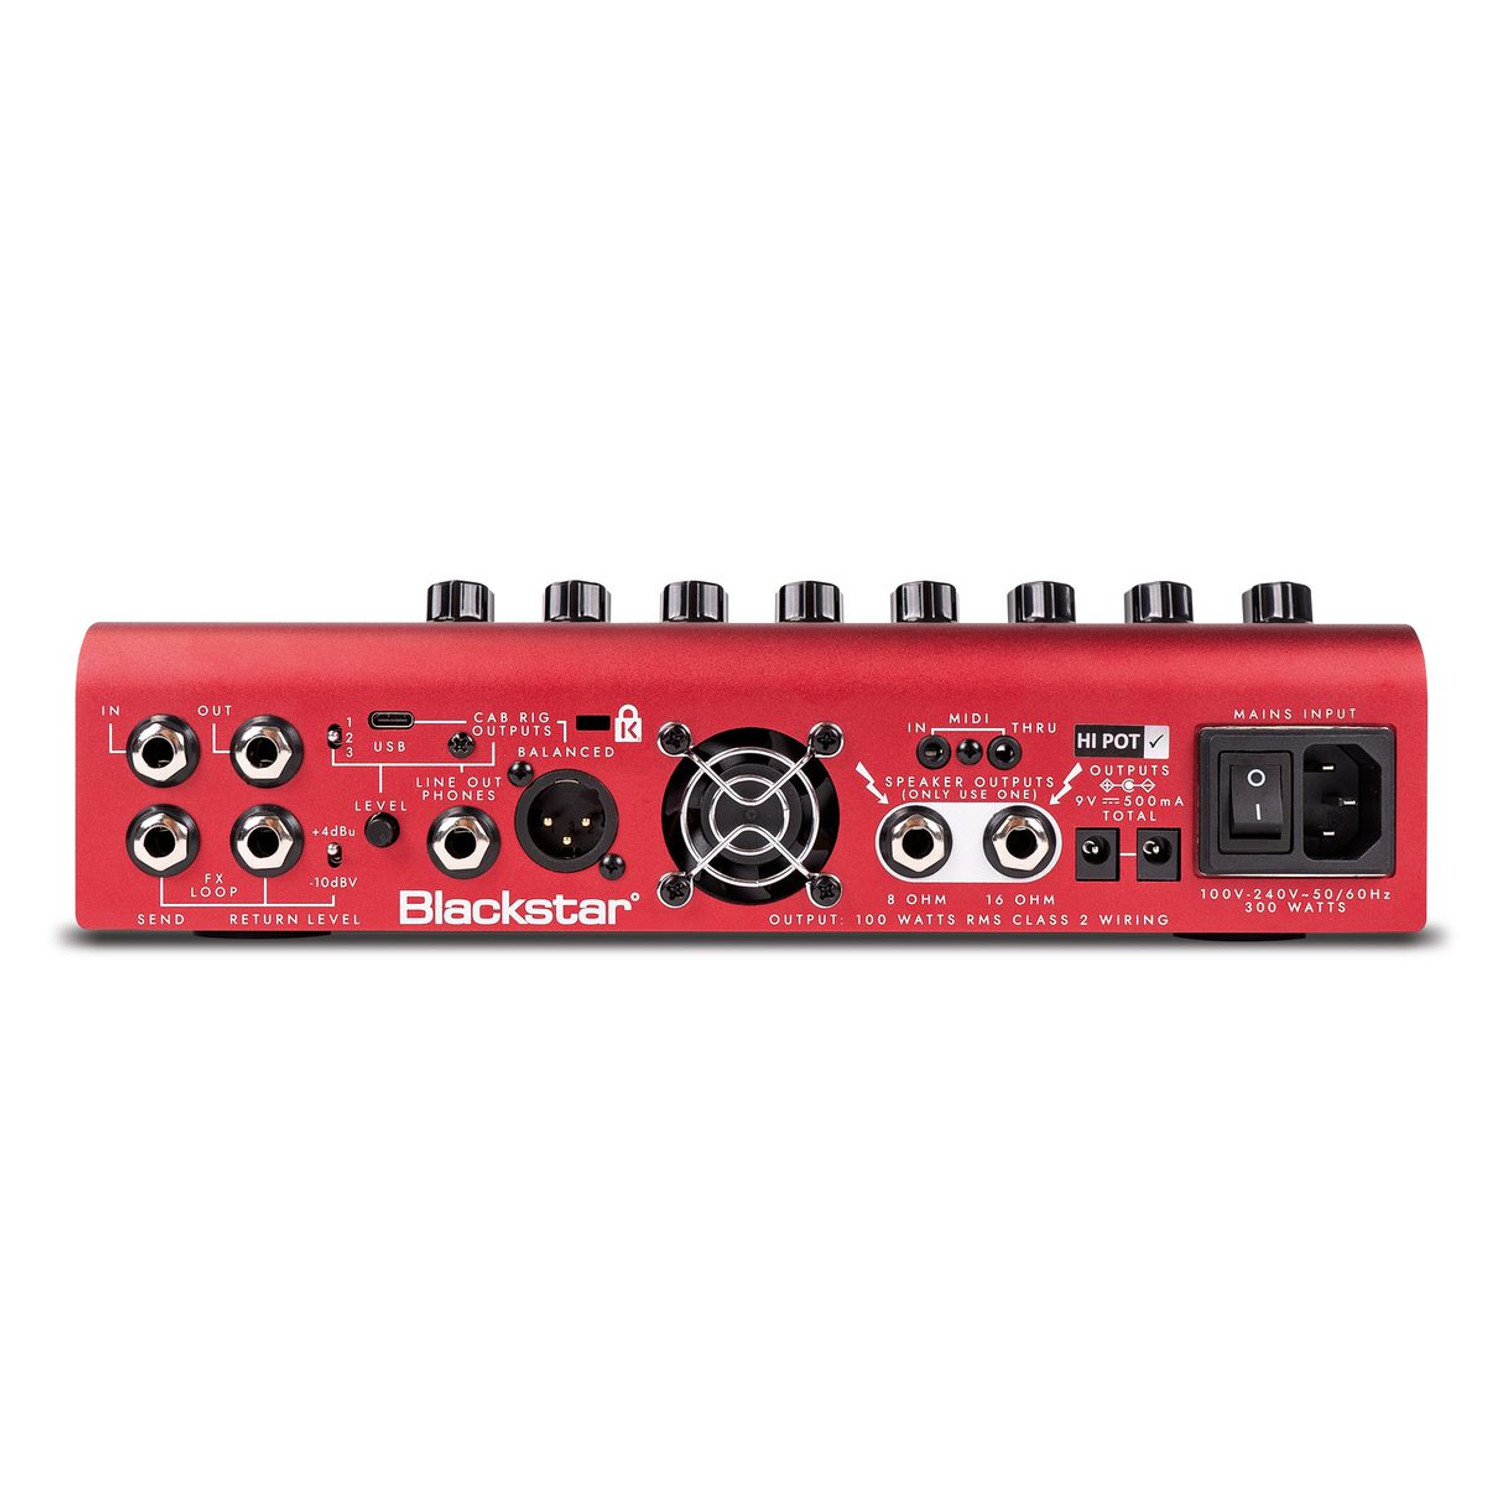 Blackstar - Dept. 10 AMPED 2 - 100w Guitar Amplifier + FX Pedal - New